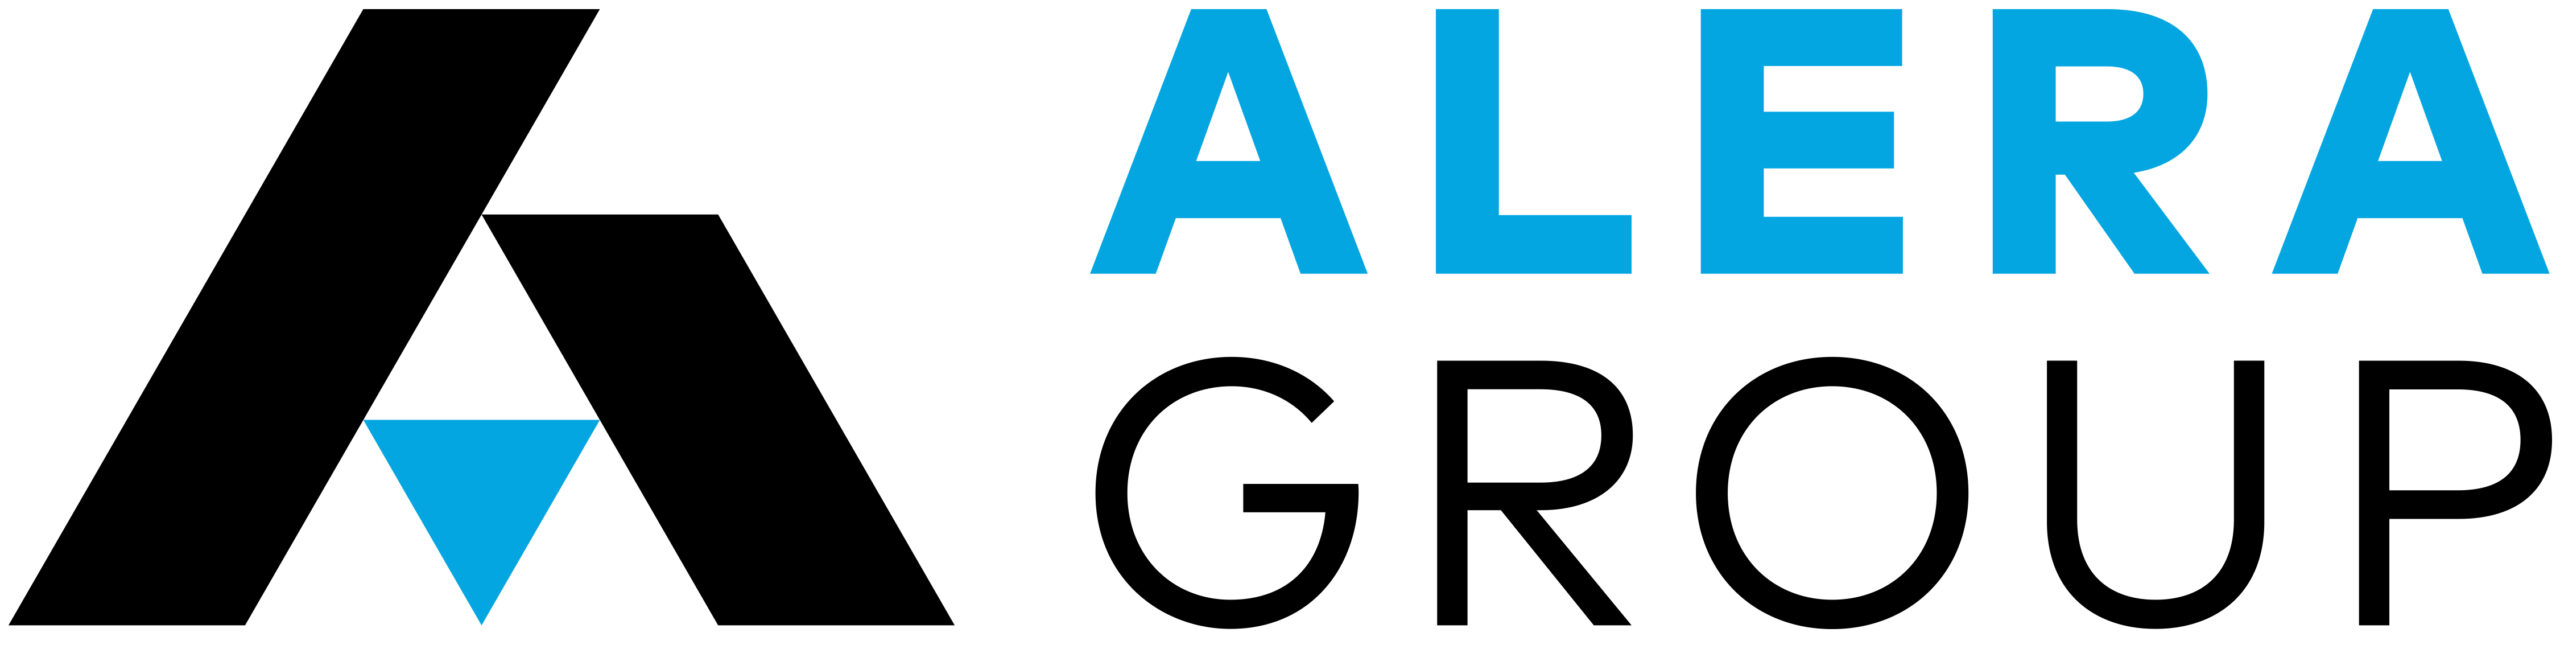 alera-group